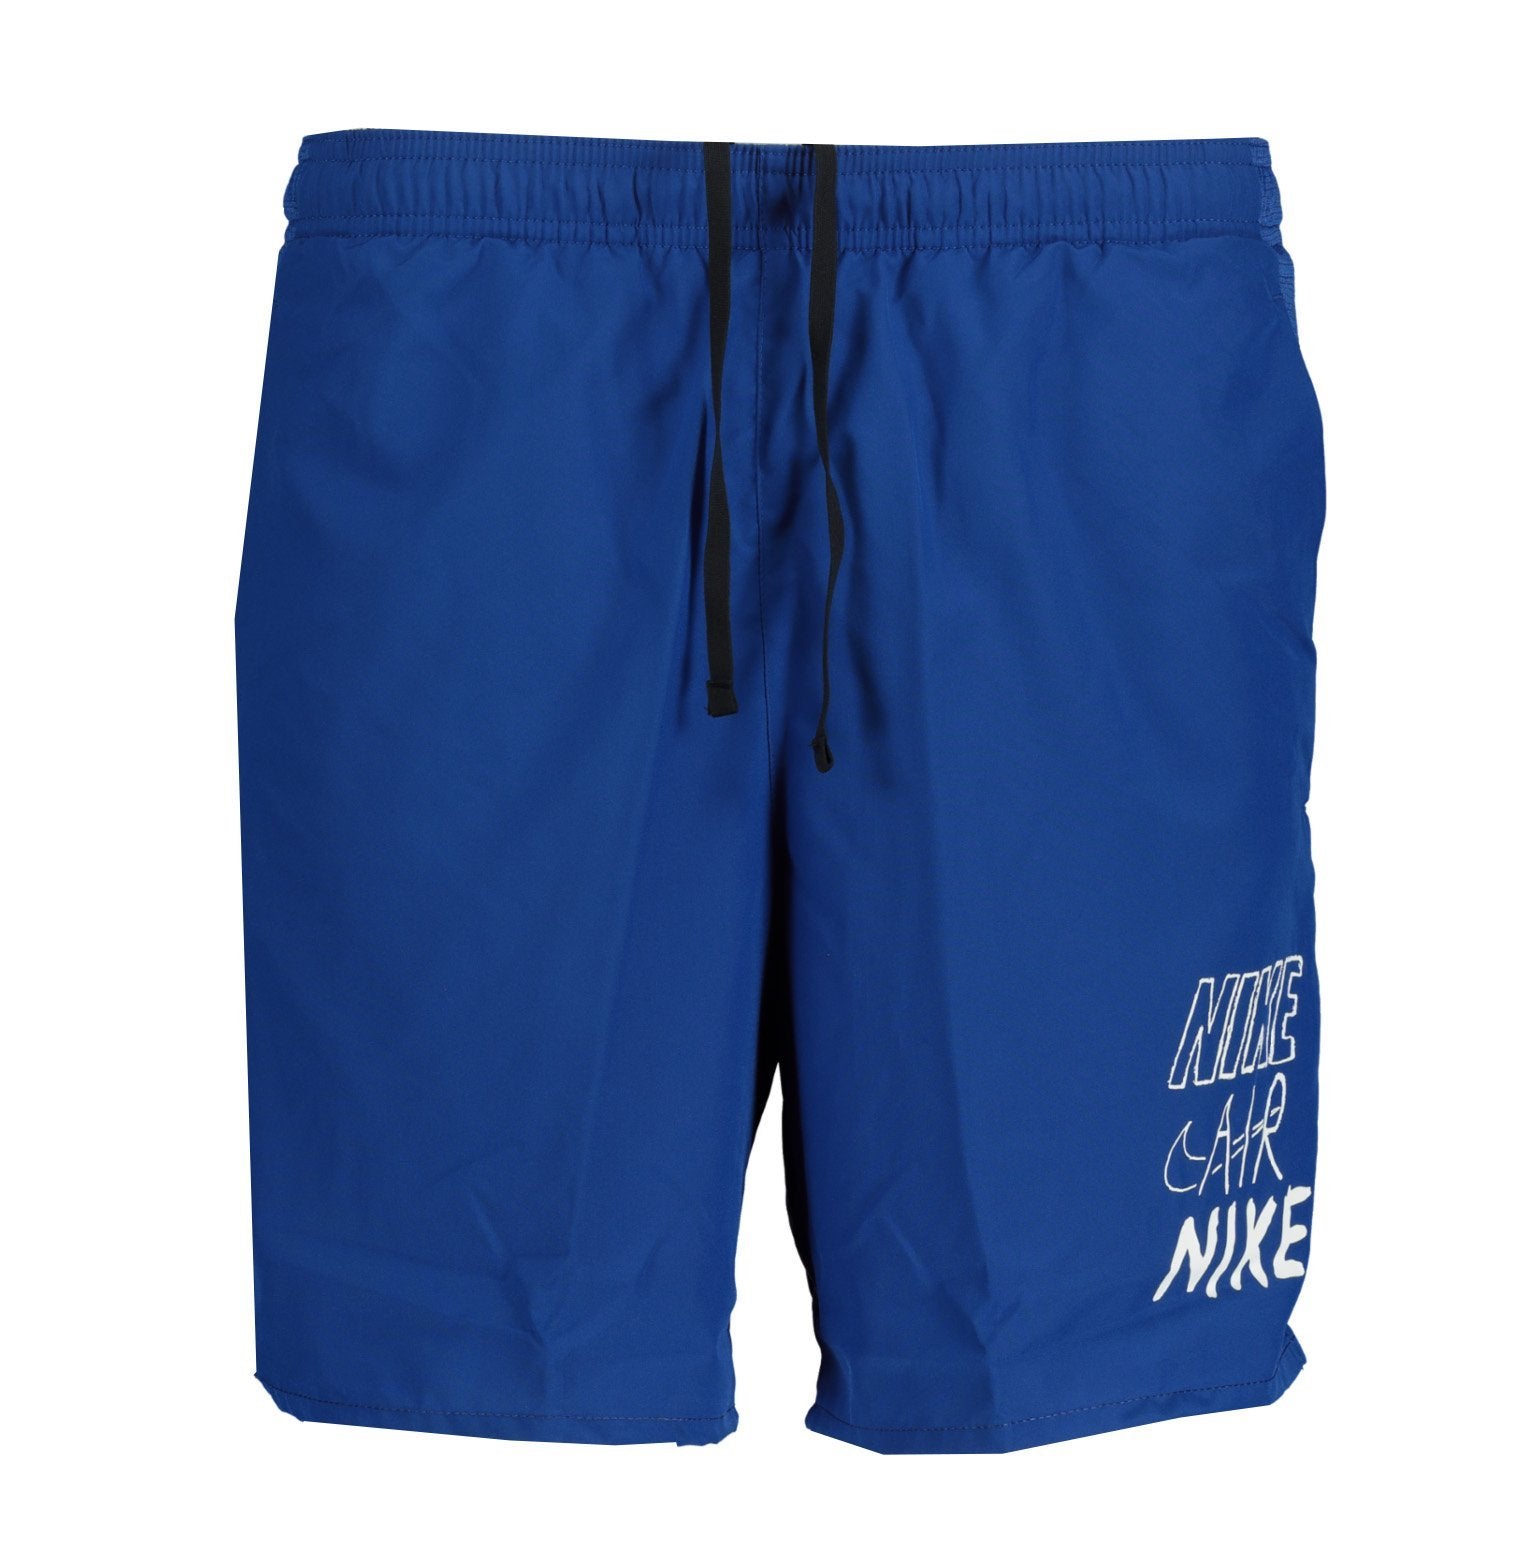 Nike Dri-Fit Challenger 7 Inch Blue - LinkFashionco